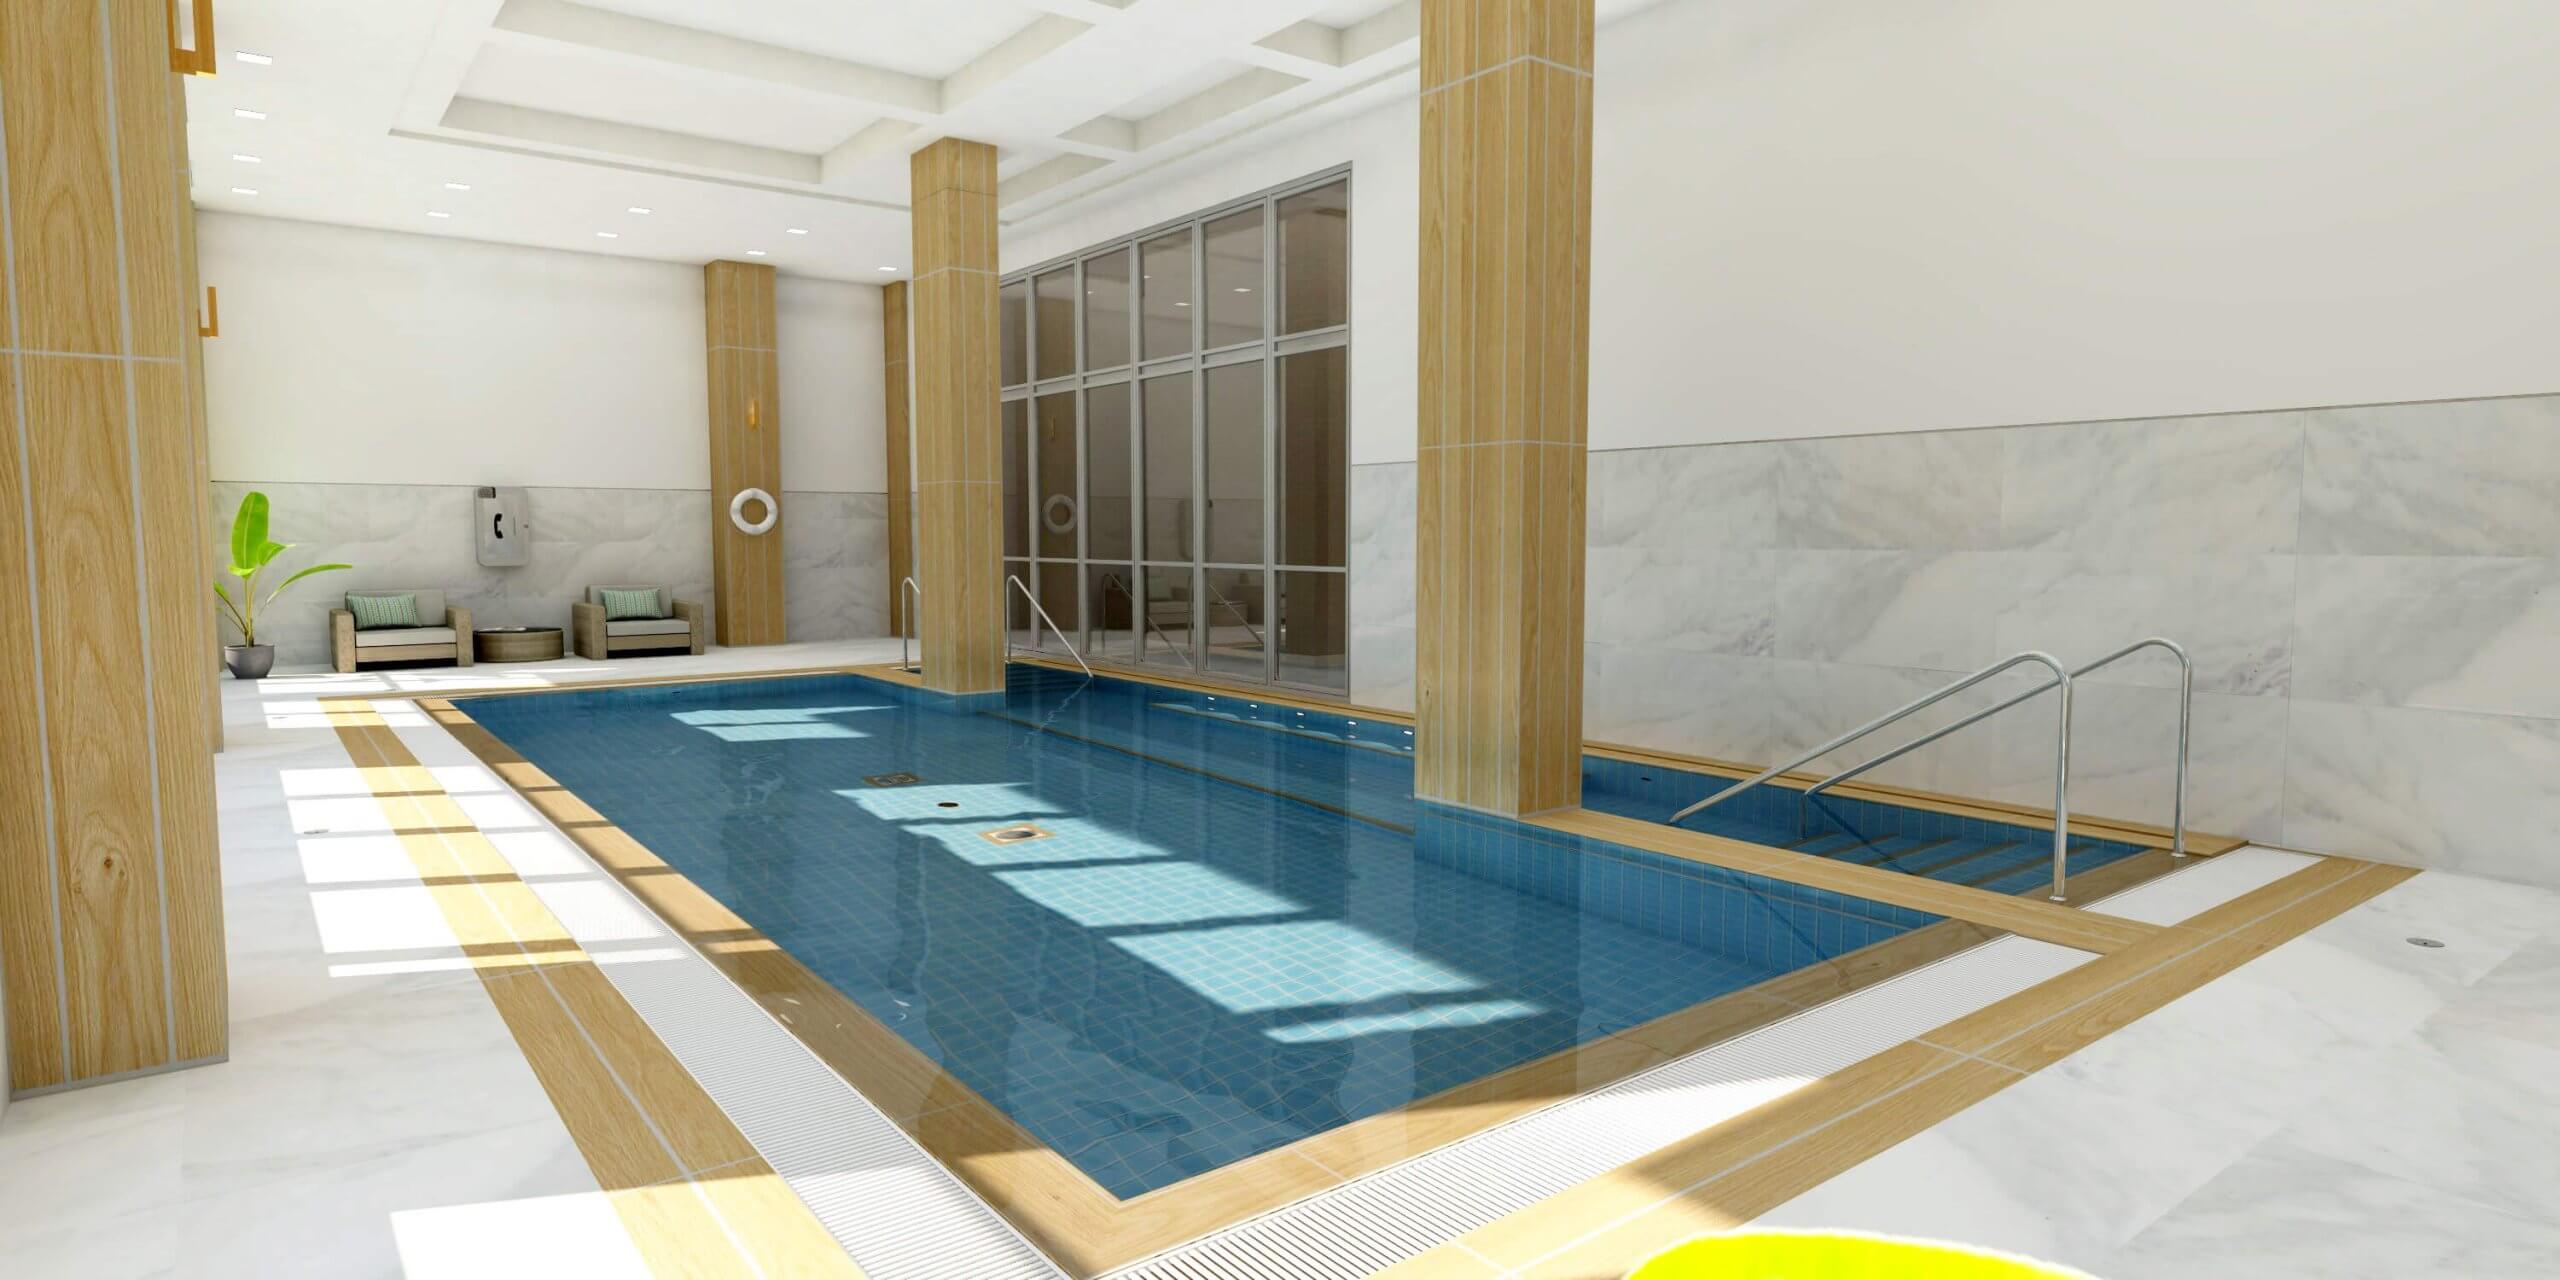 render image of interior pool